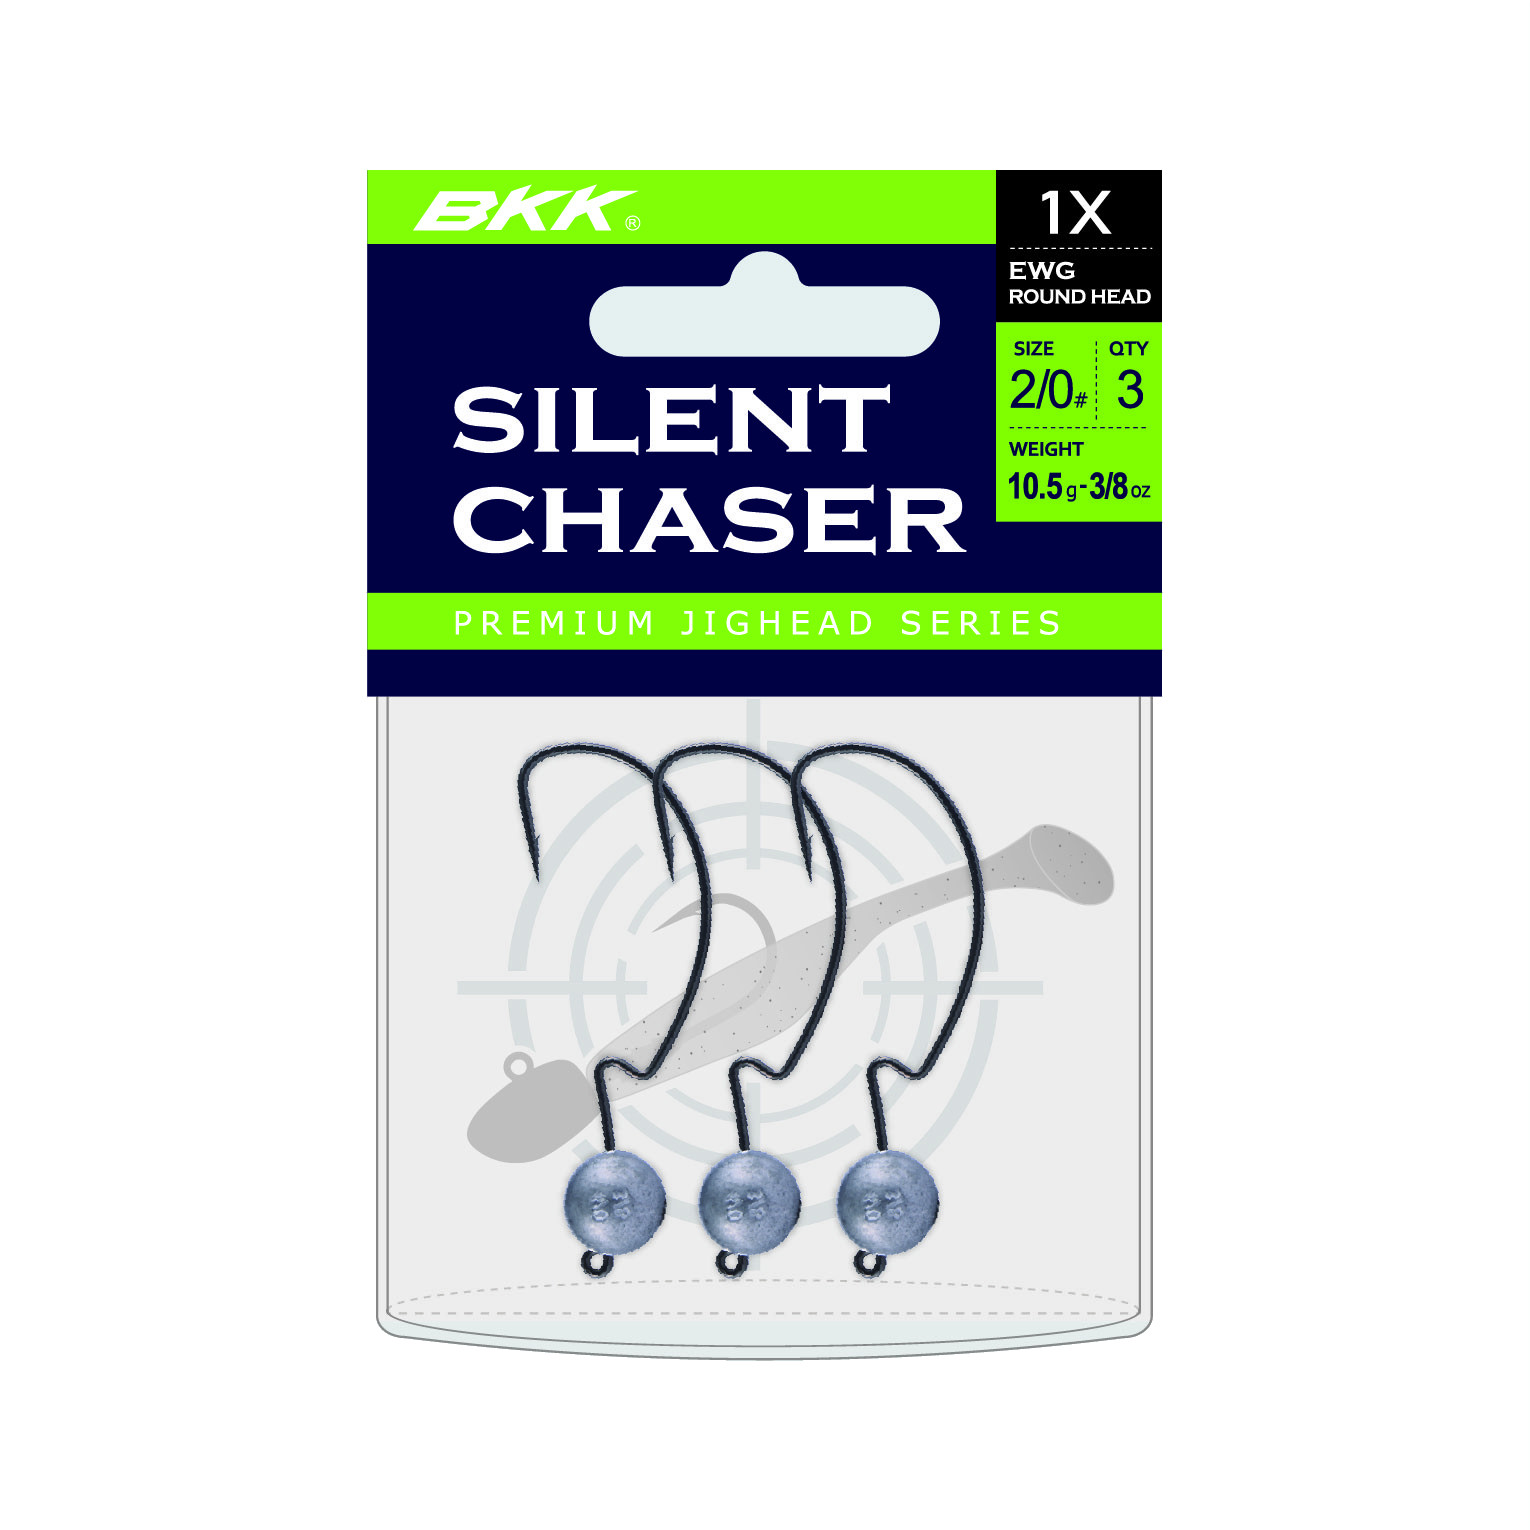 BKK Silent Chaser 1X EWG Round Head Cabeza de Plomo #3/0